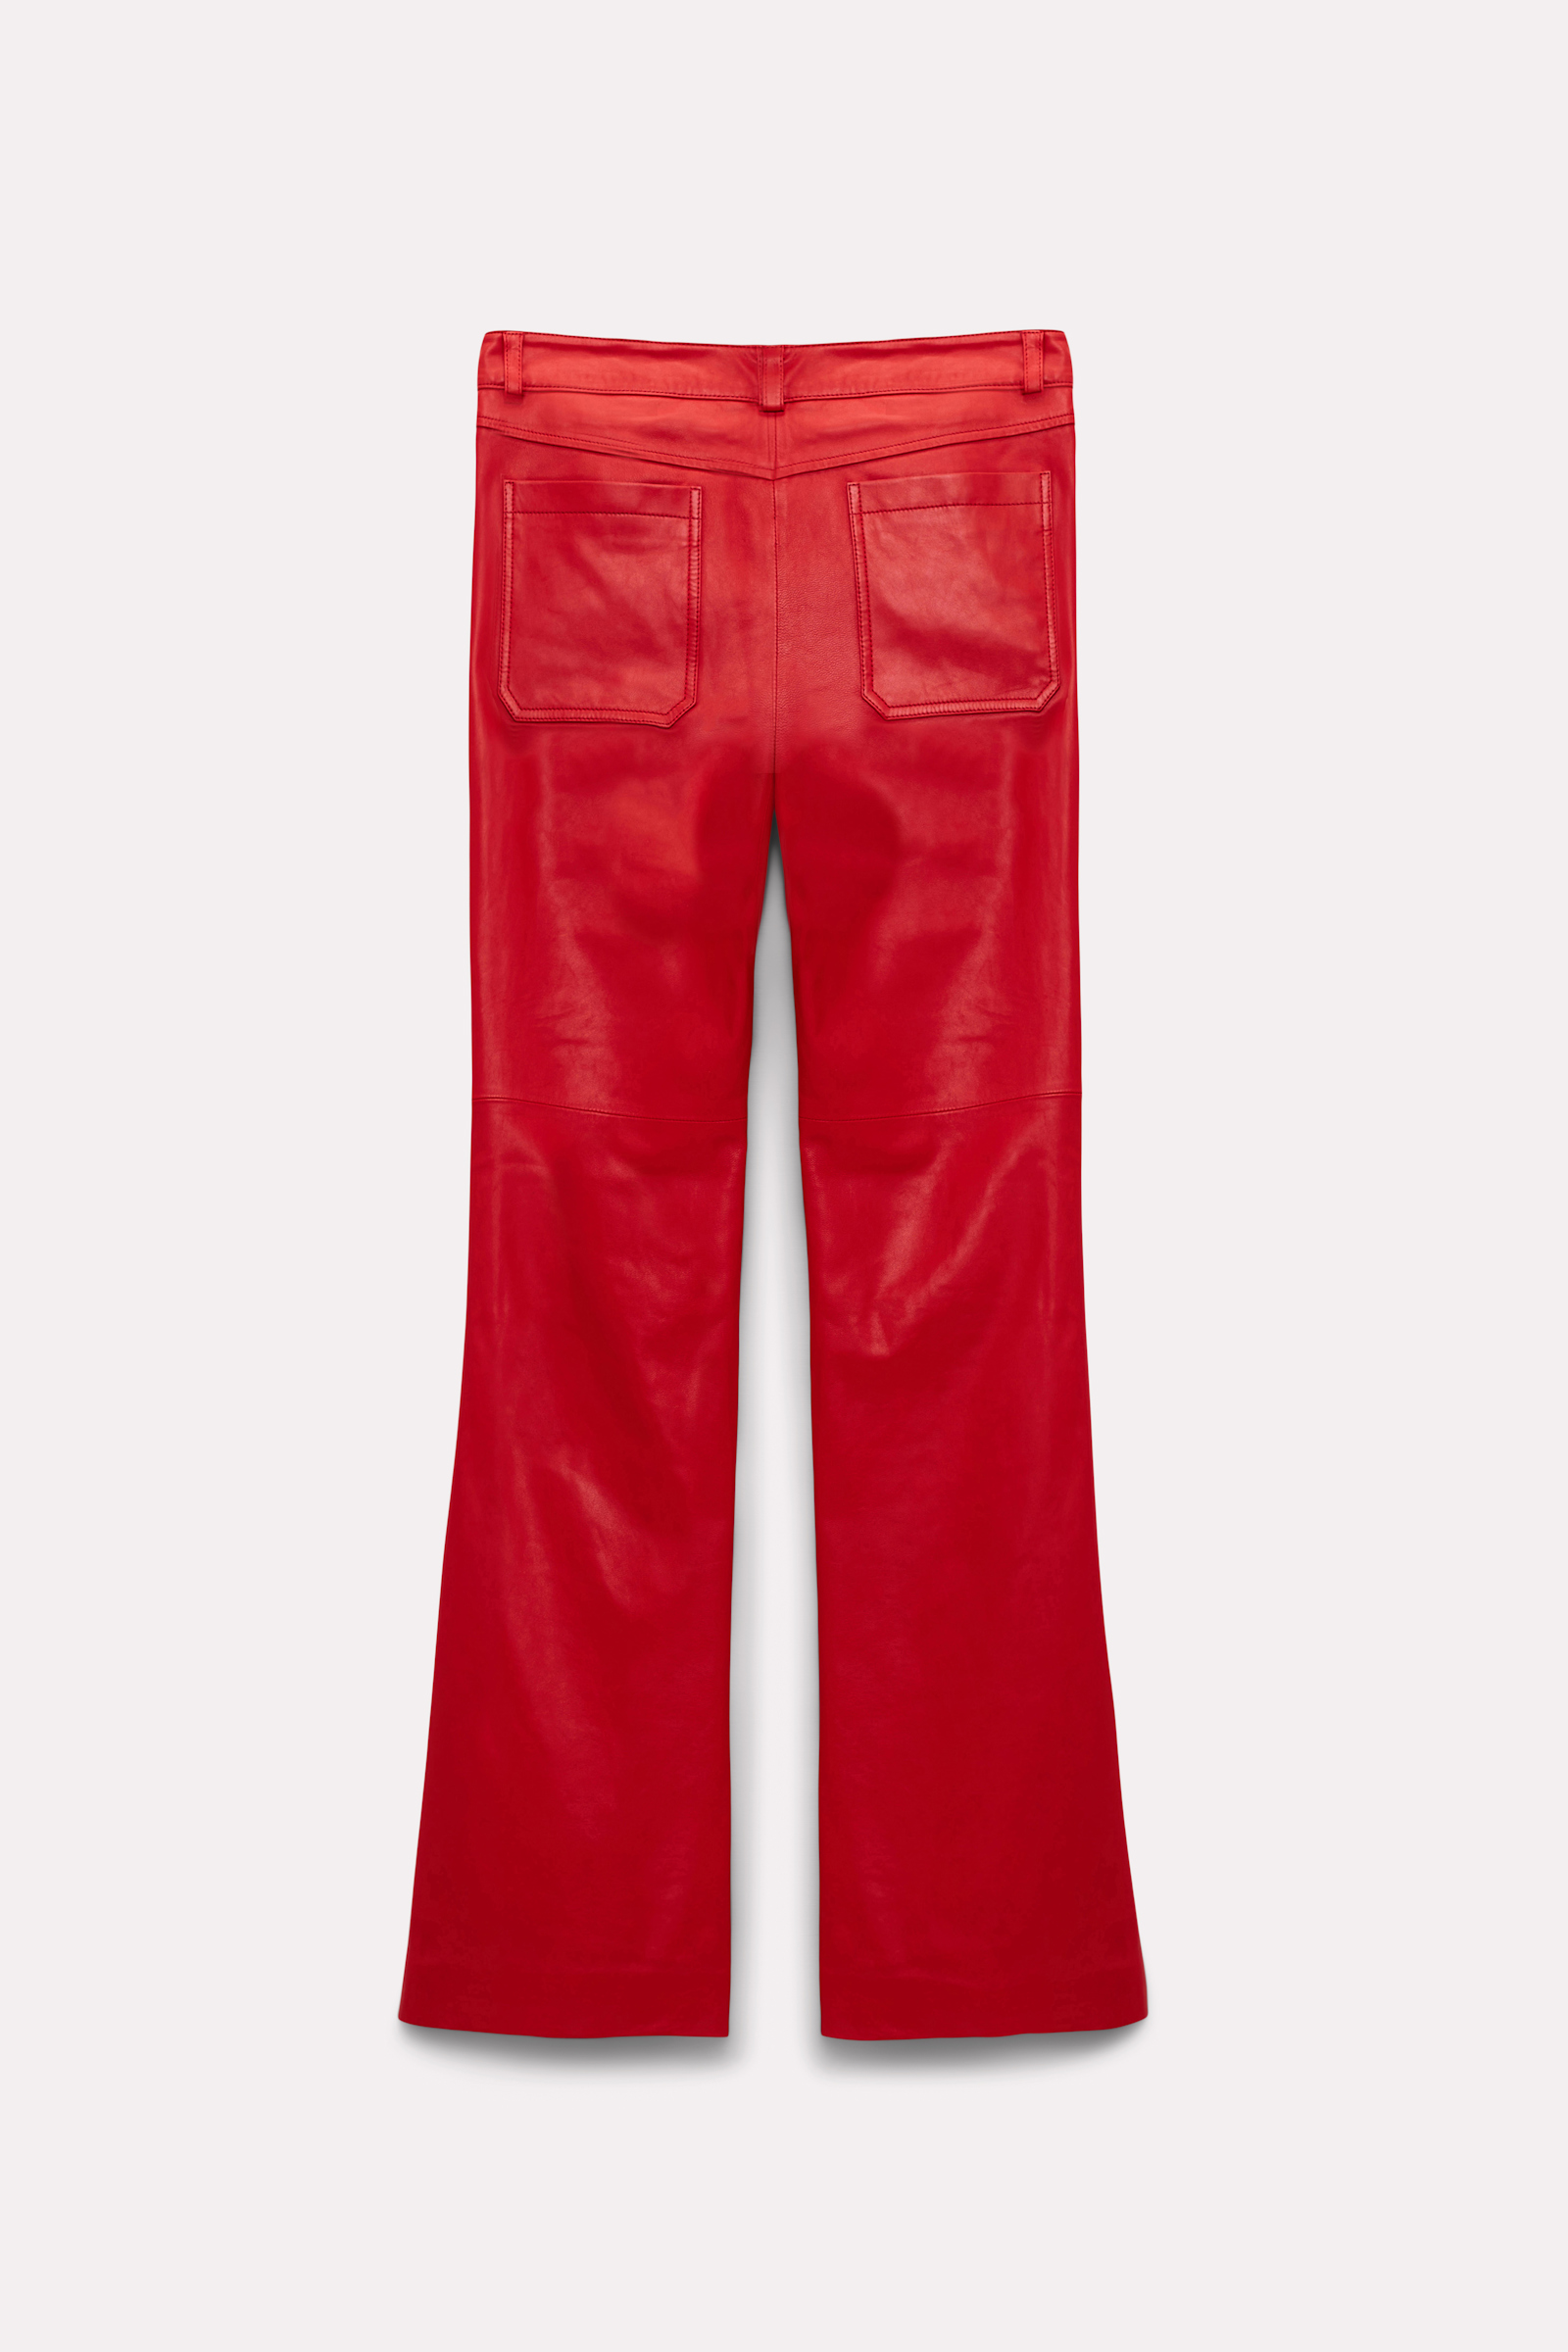 Dorothee Schumacher Lambskin pants cool red